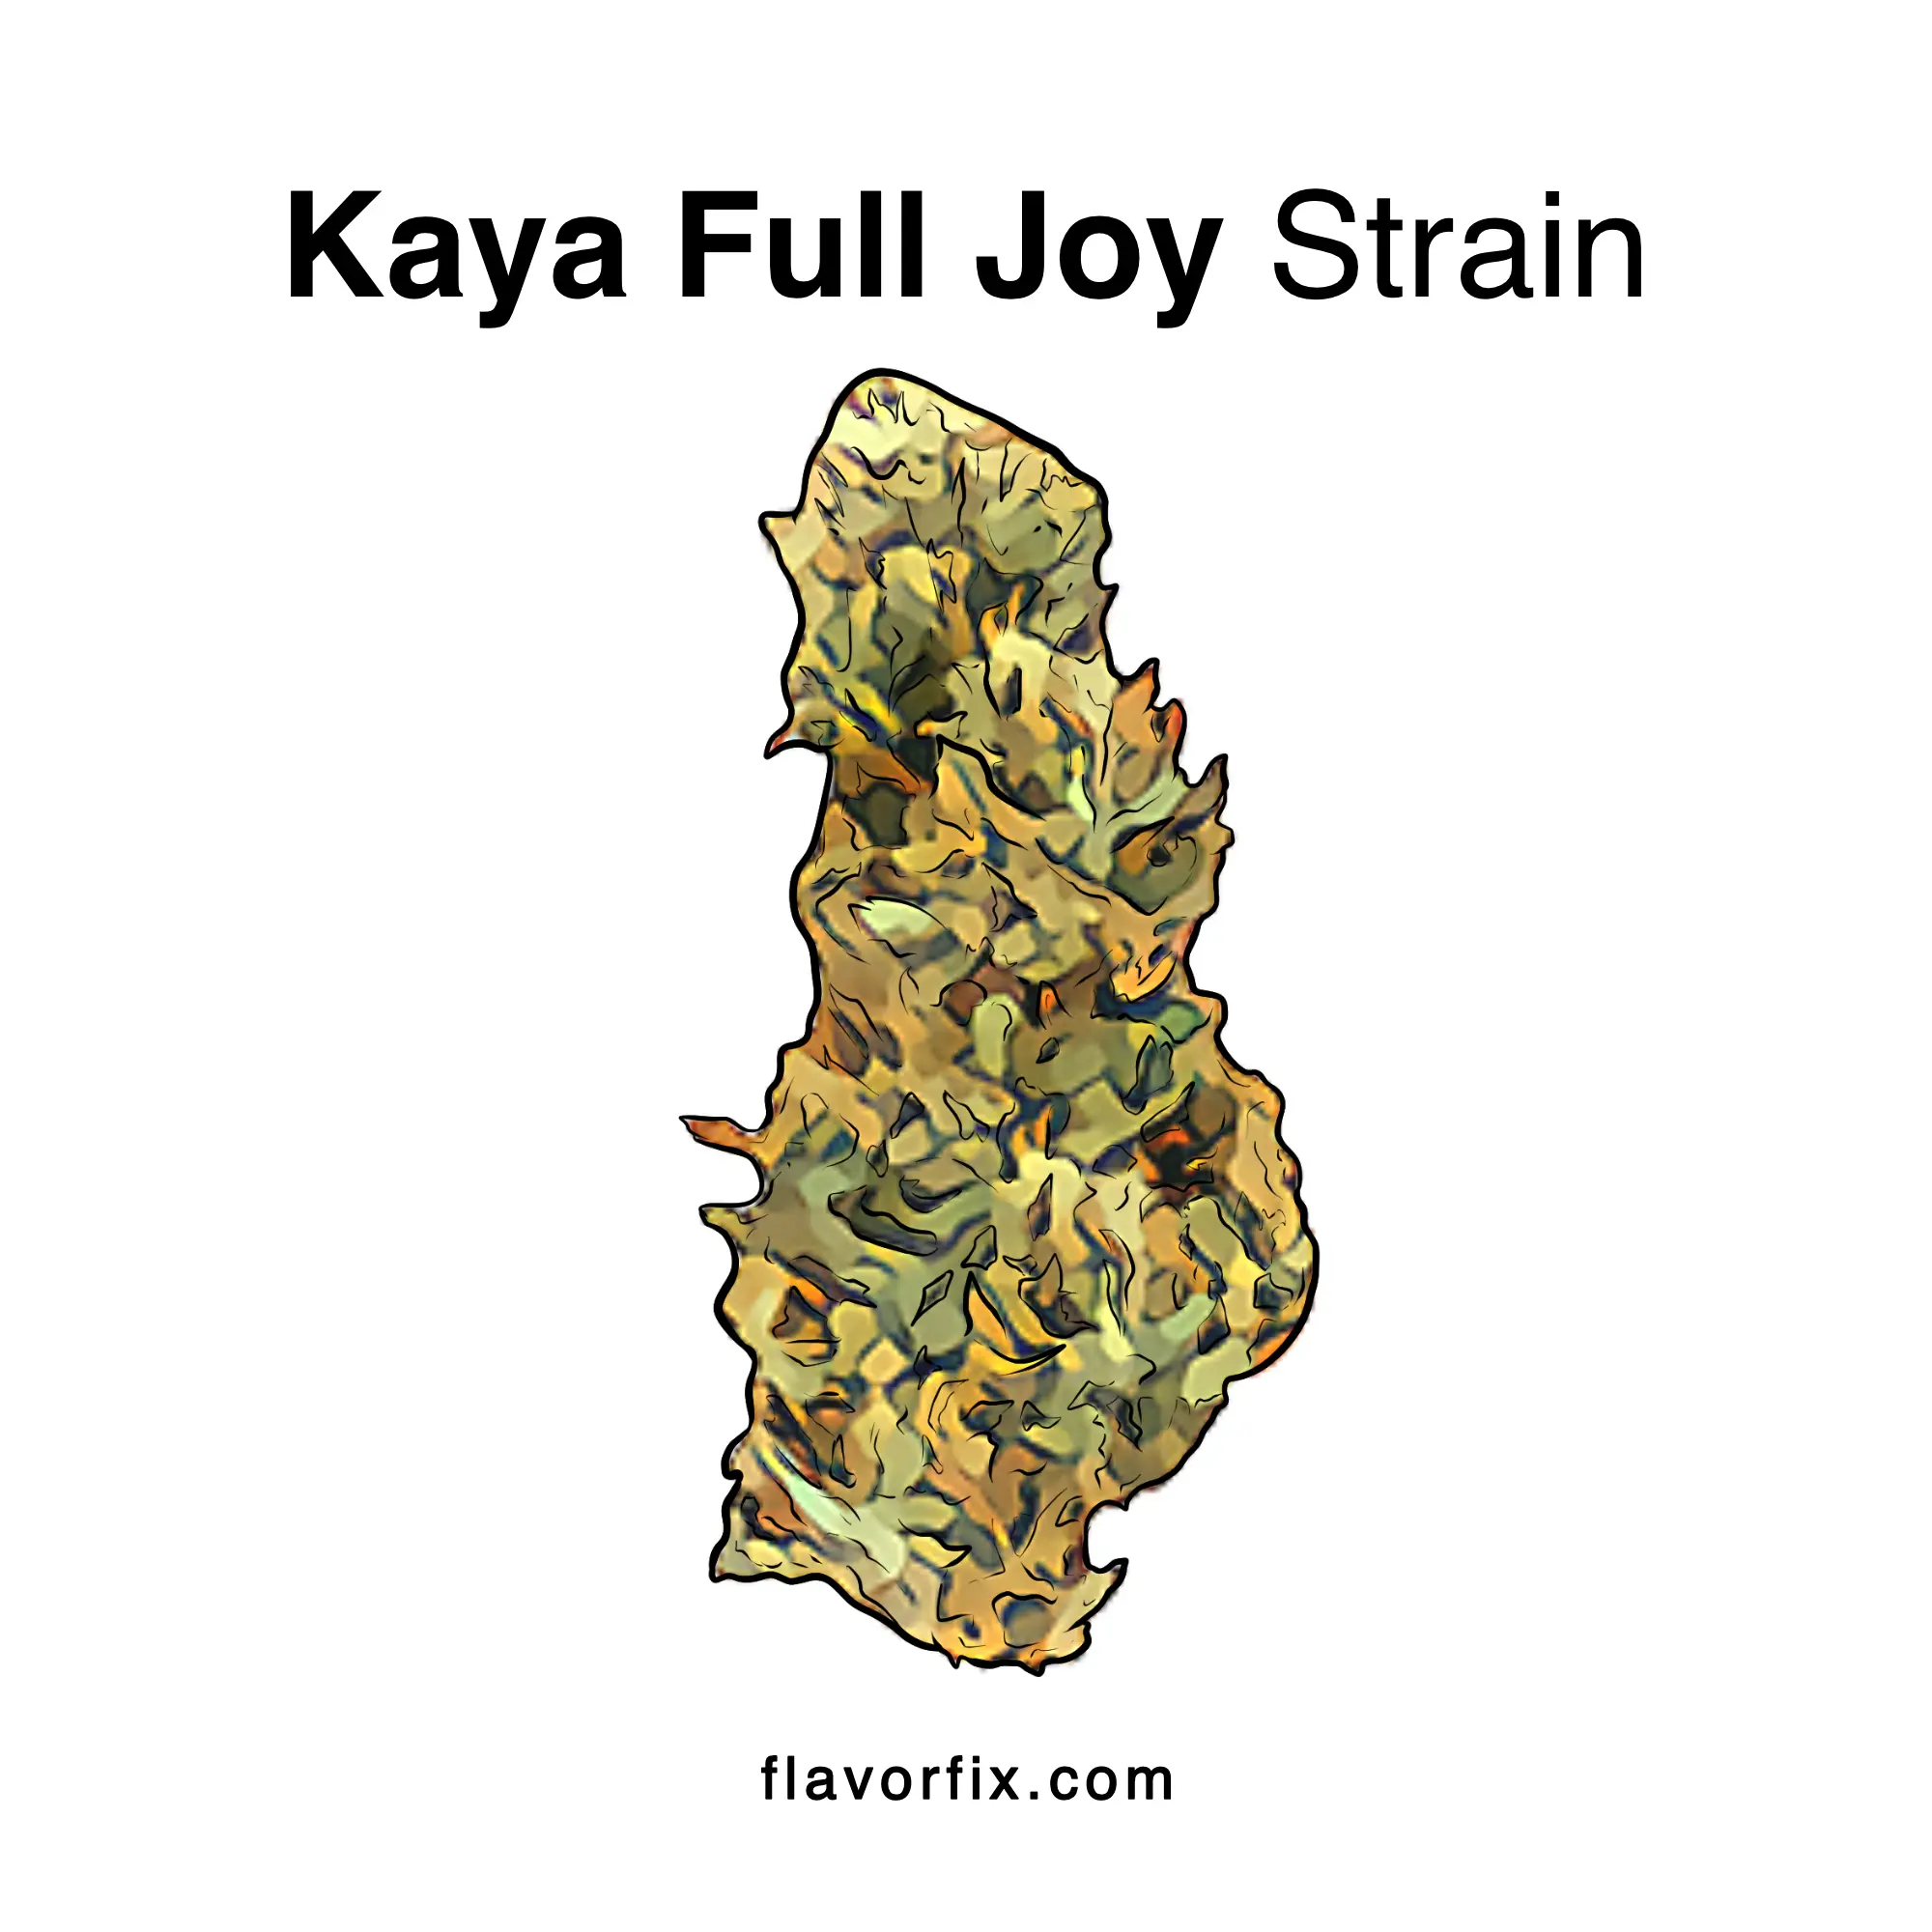 Kaya Full Joy Strain